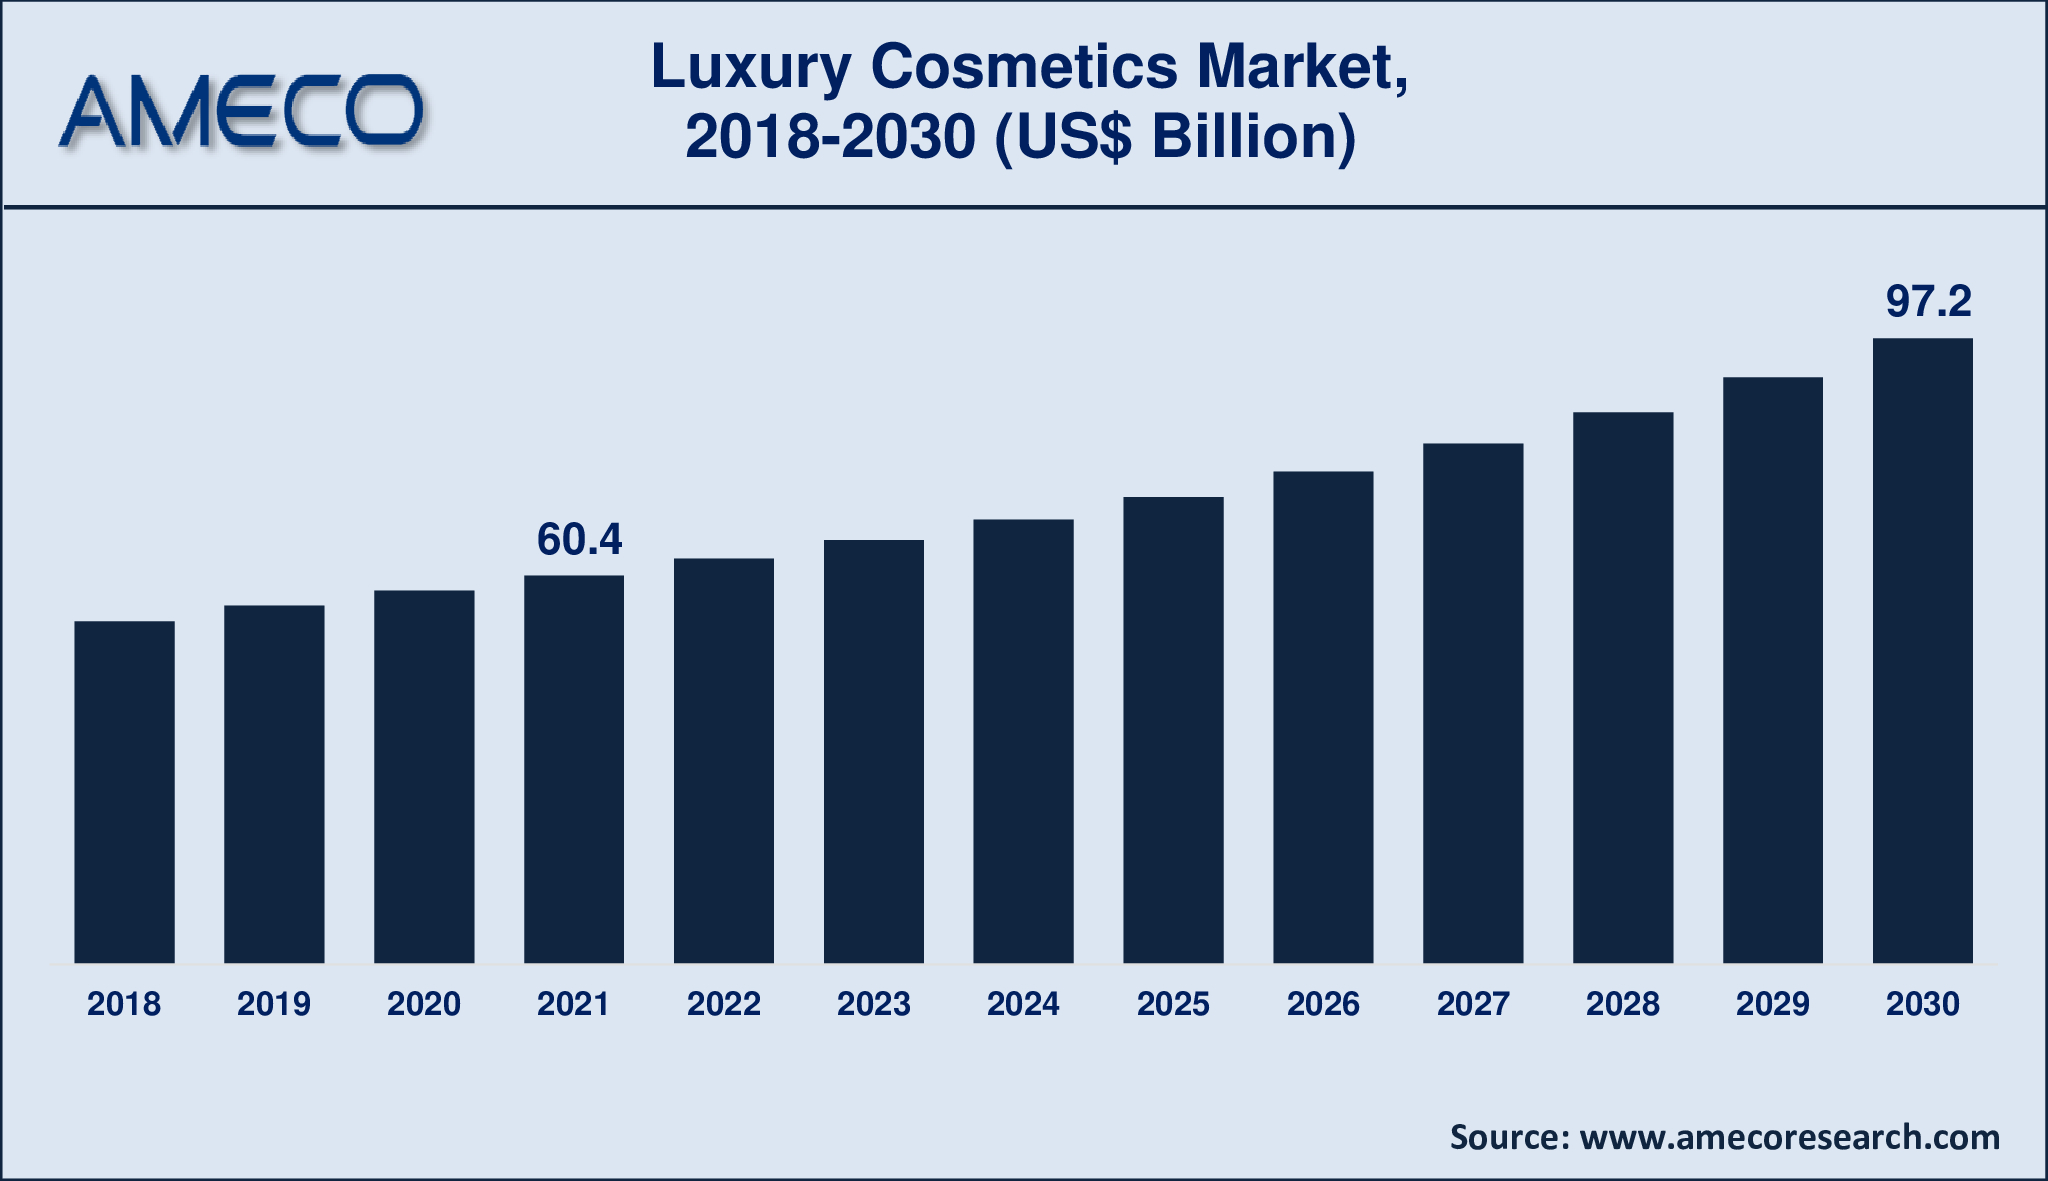 Luxury Cosmetics Market Analysis Period